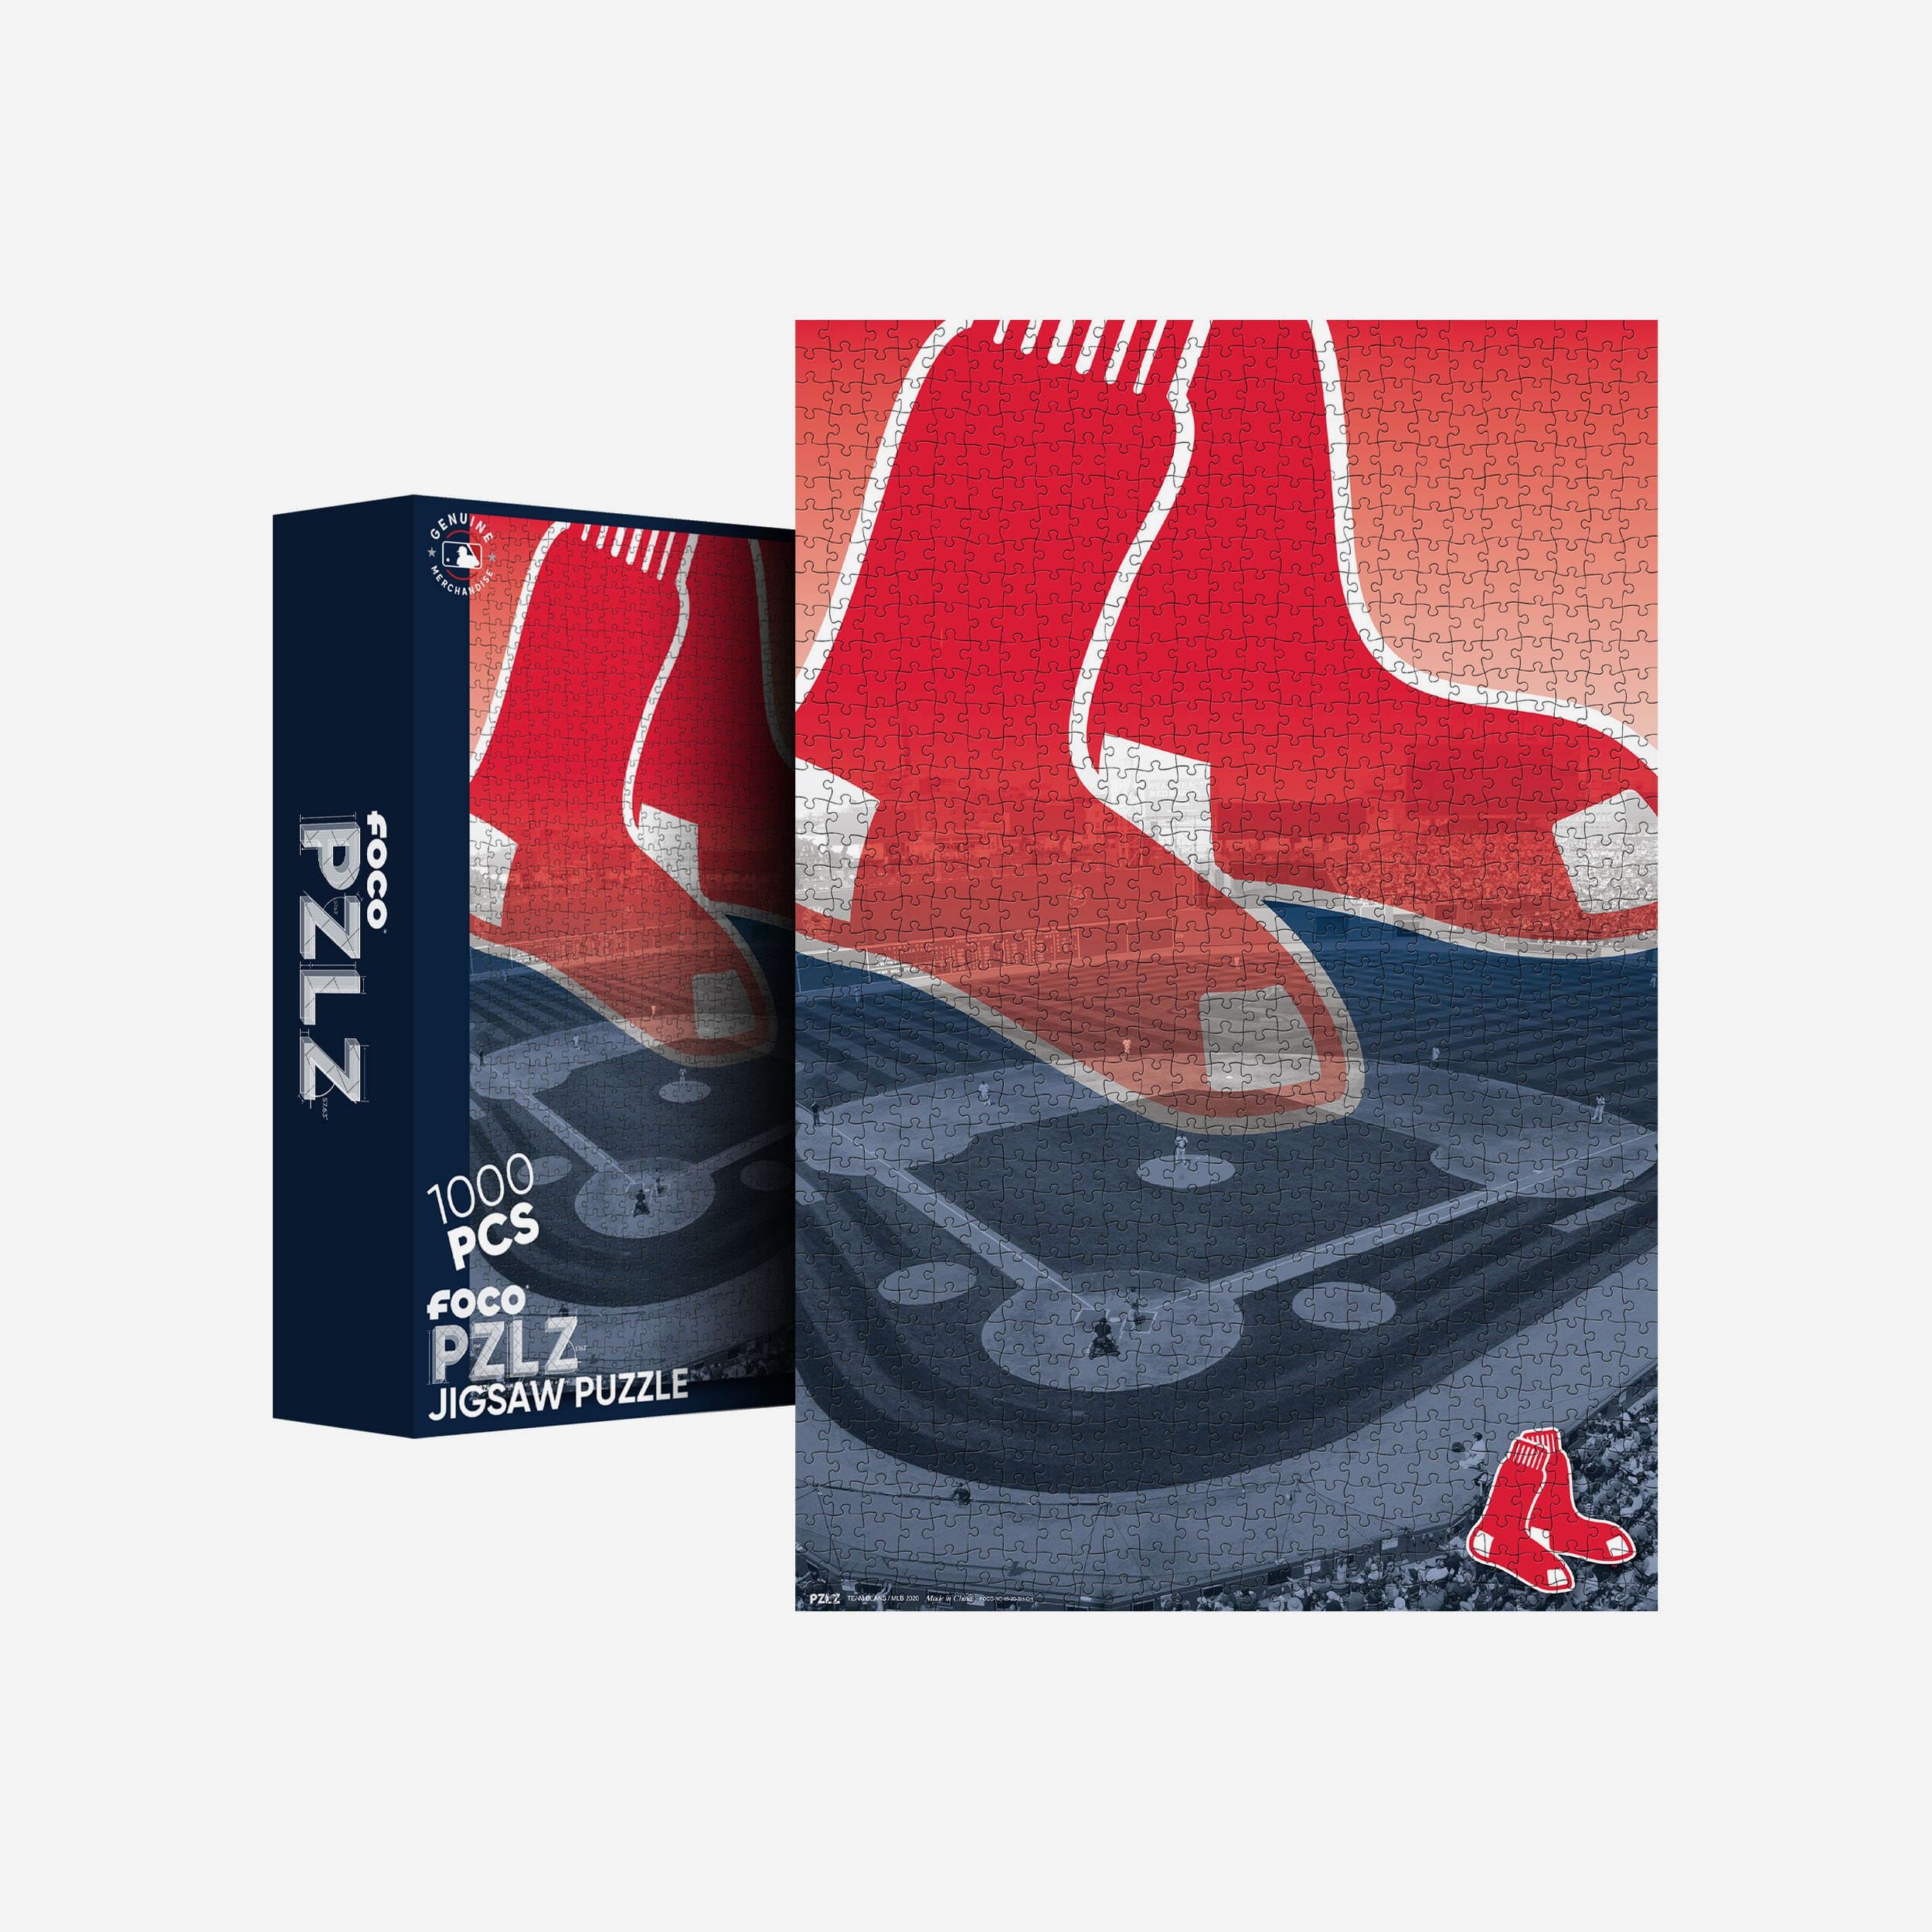 FOCO Boston Red Sox Fenway Park Stadium 1000 Piece Jigsaw Puzzle PZLZ -